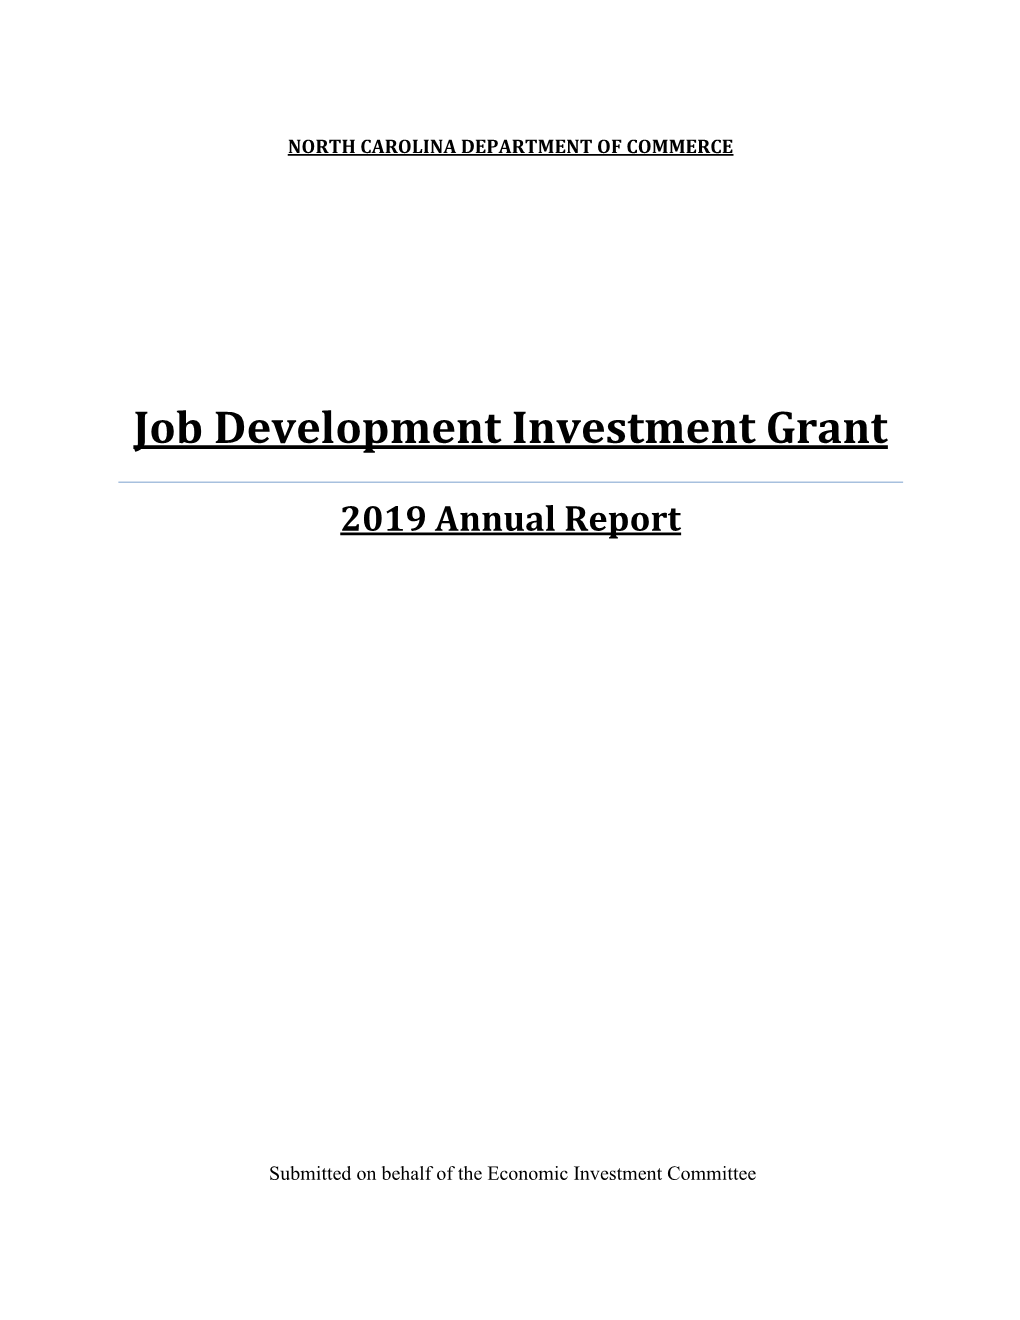 Job Development Investment Grant 2019 Annual Report